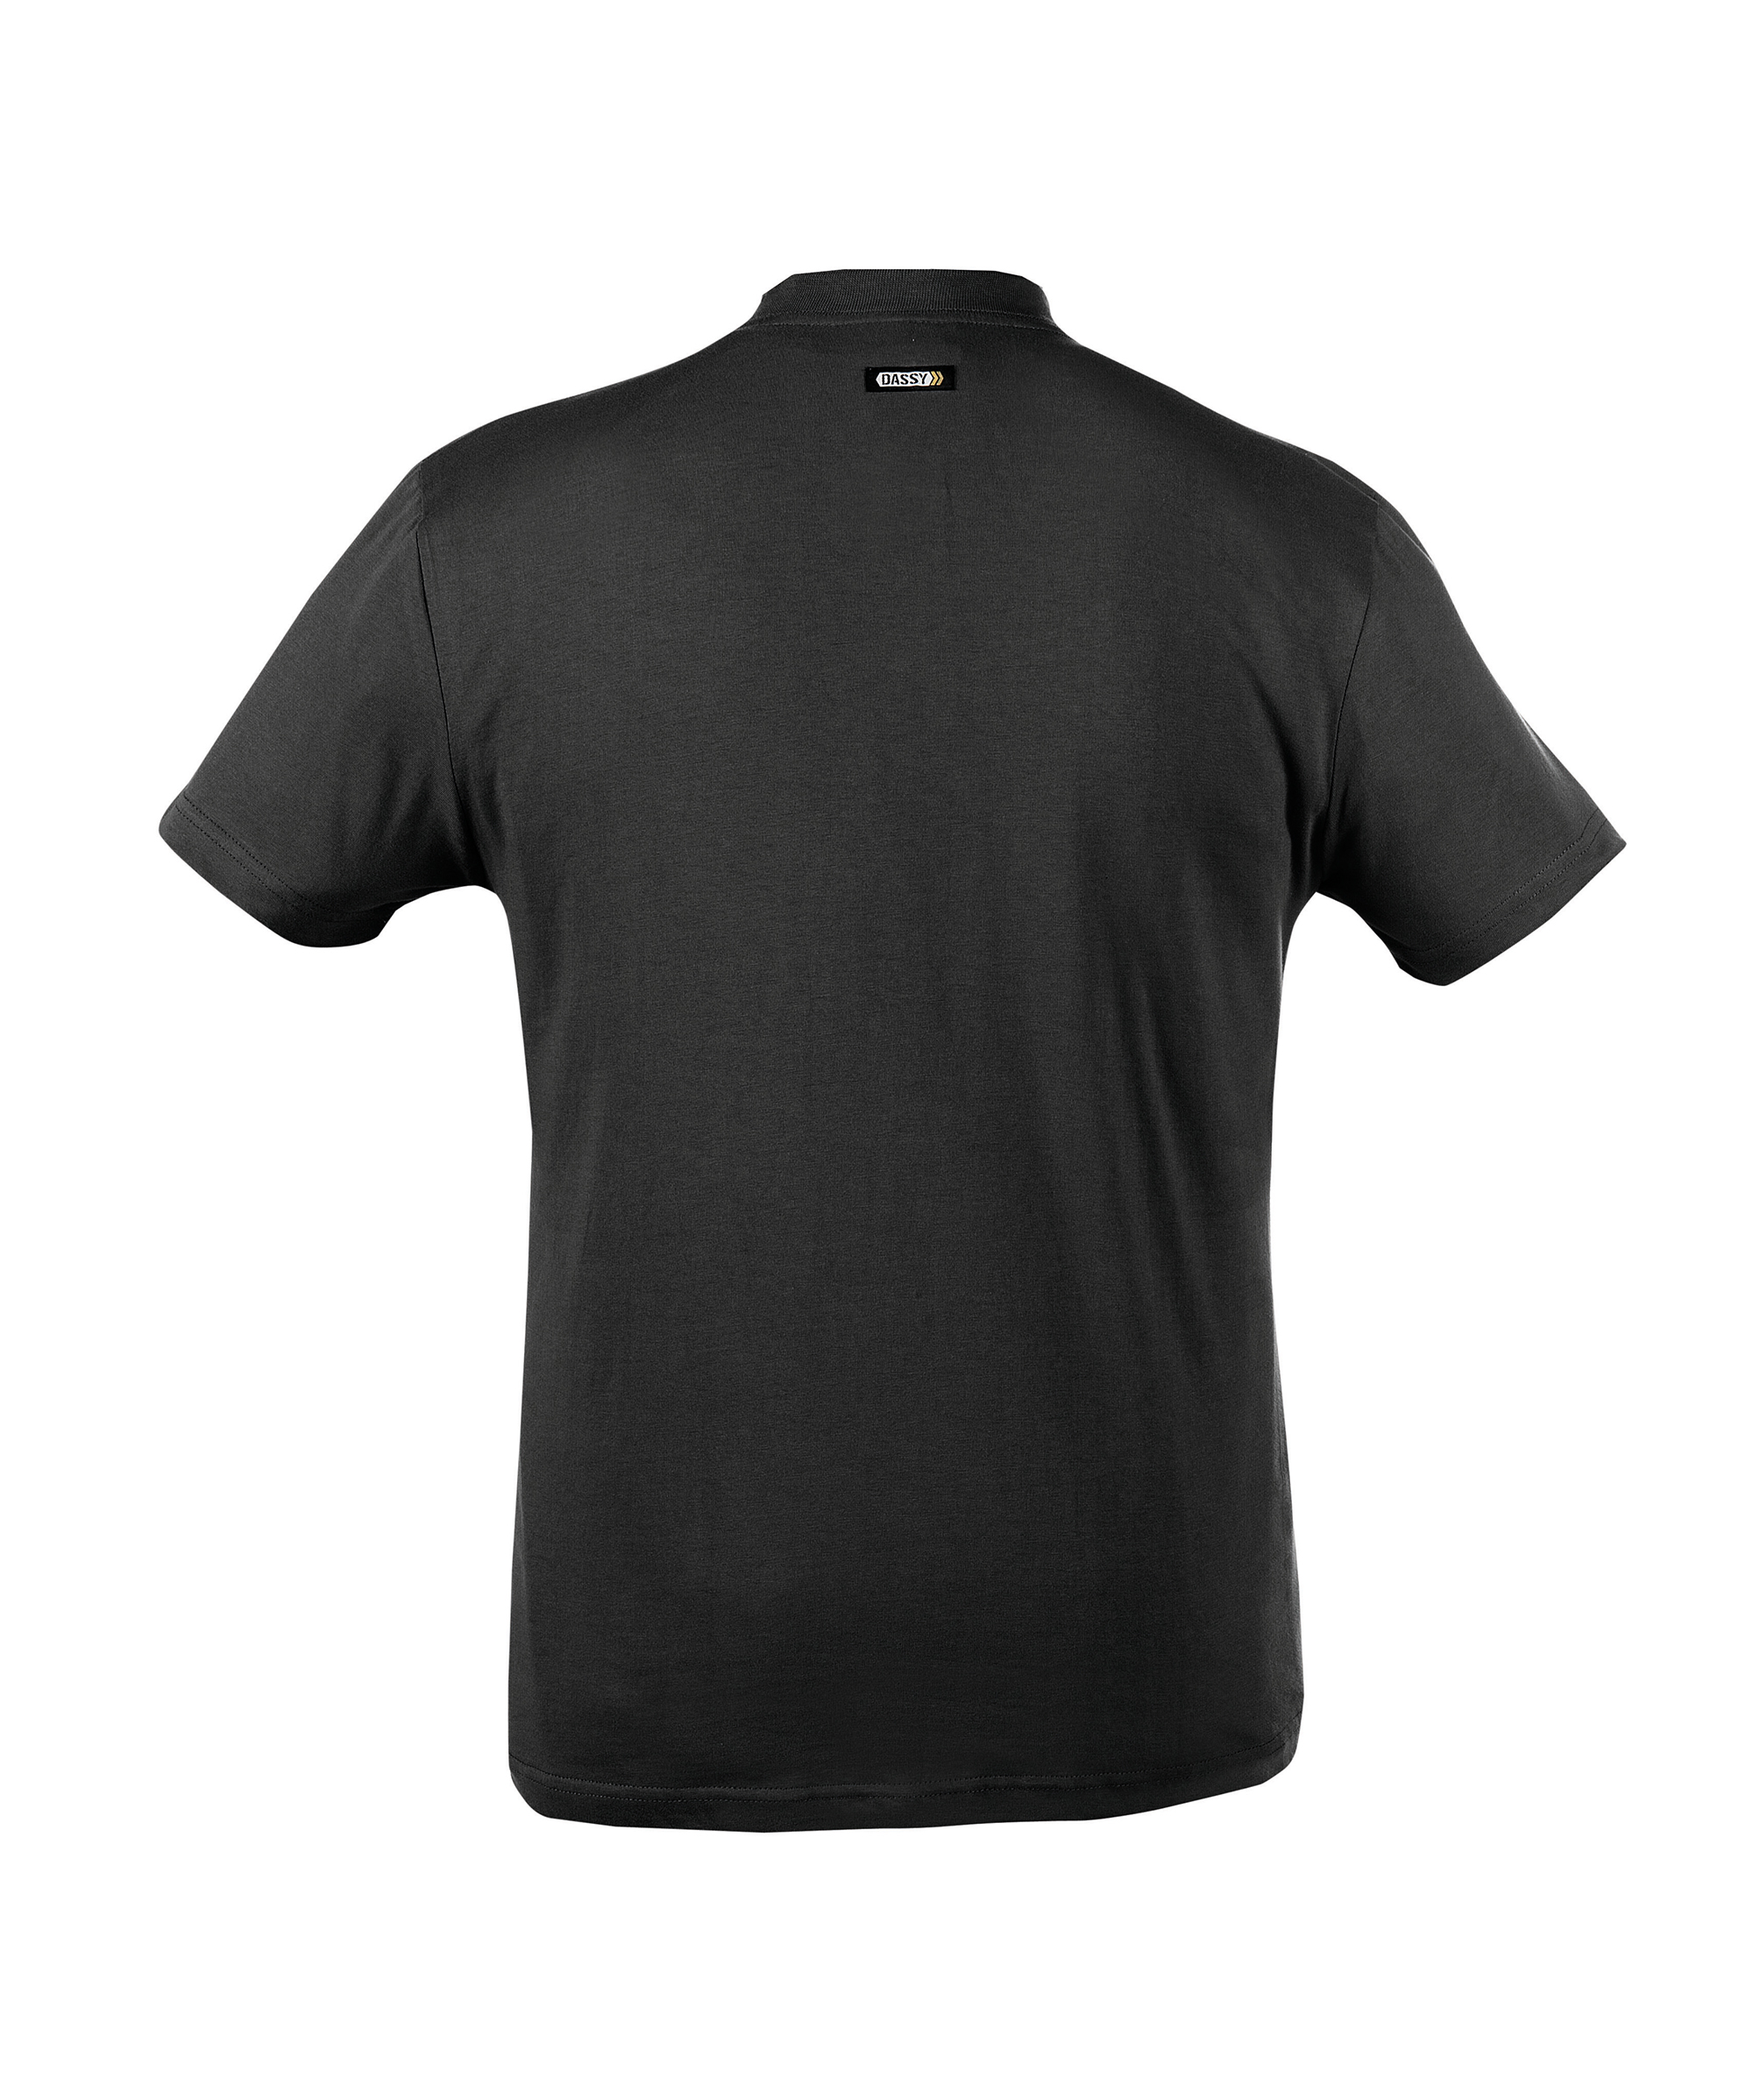 oscar_t-shirt_black_back.jpg